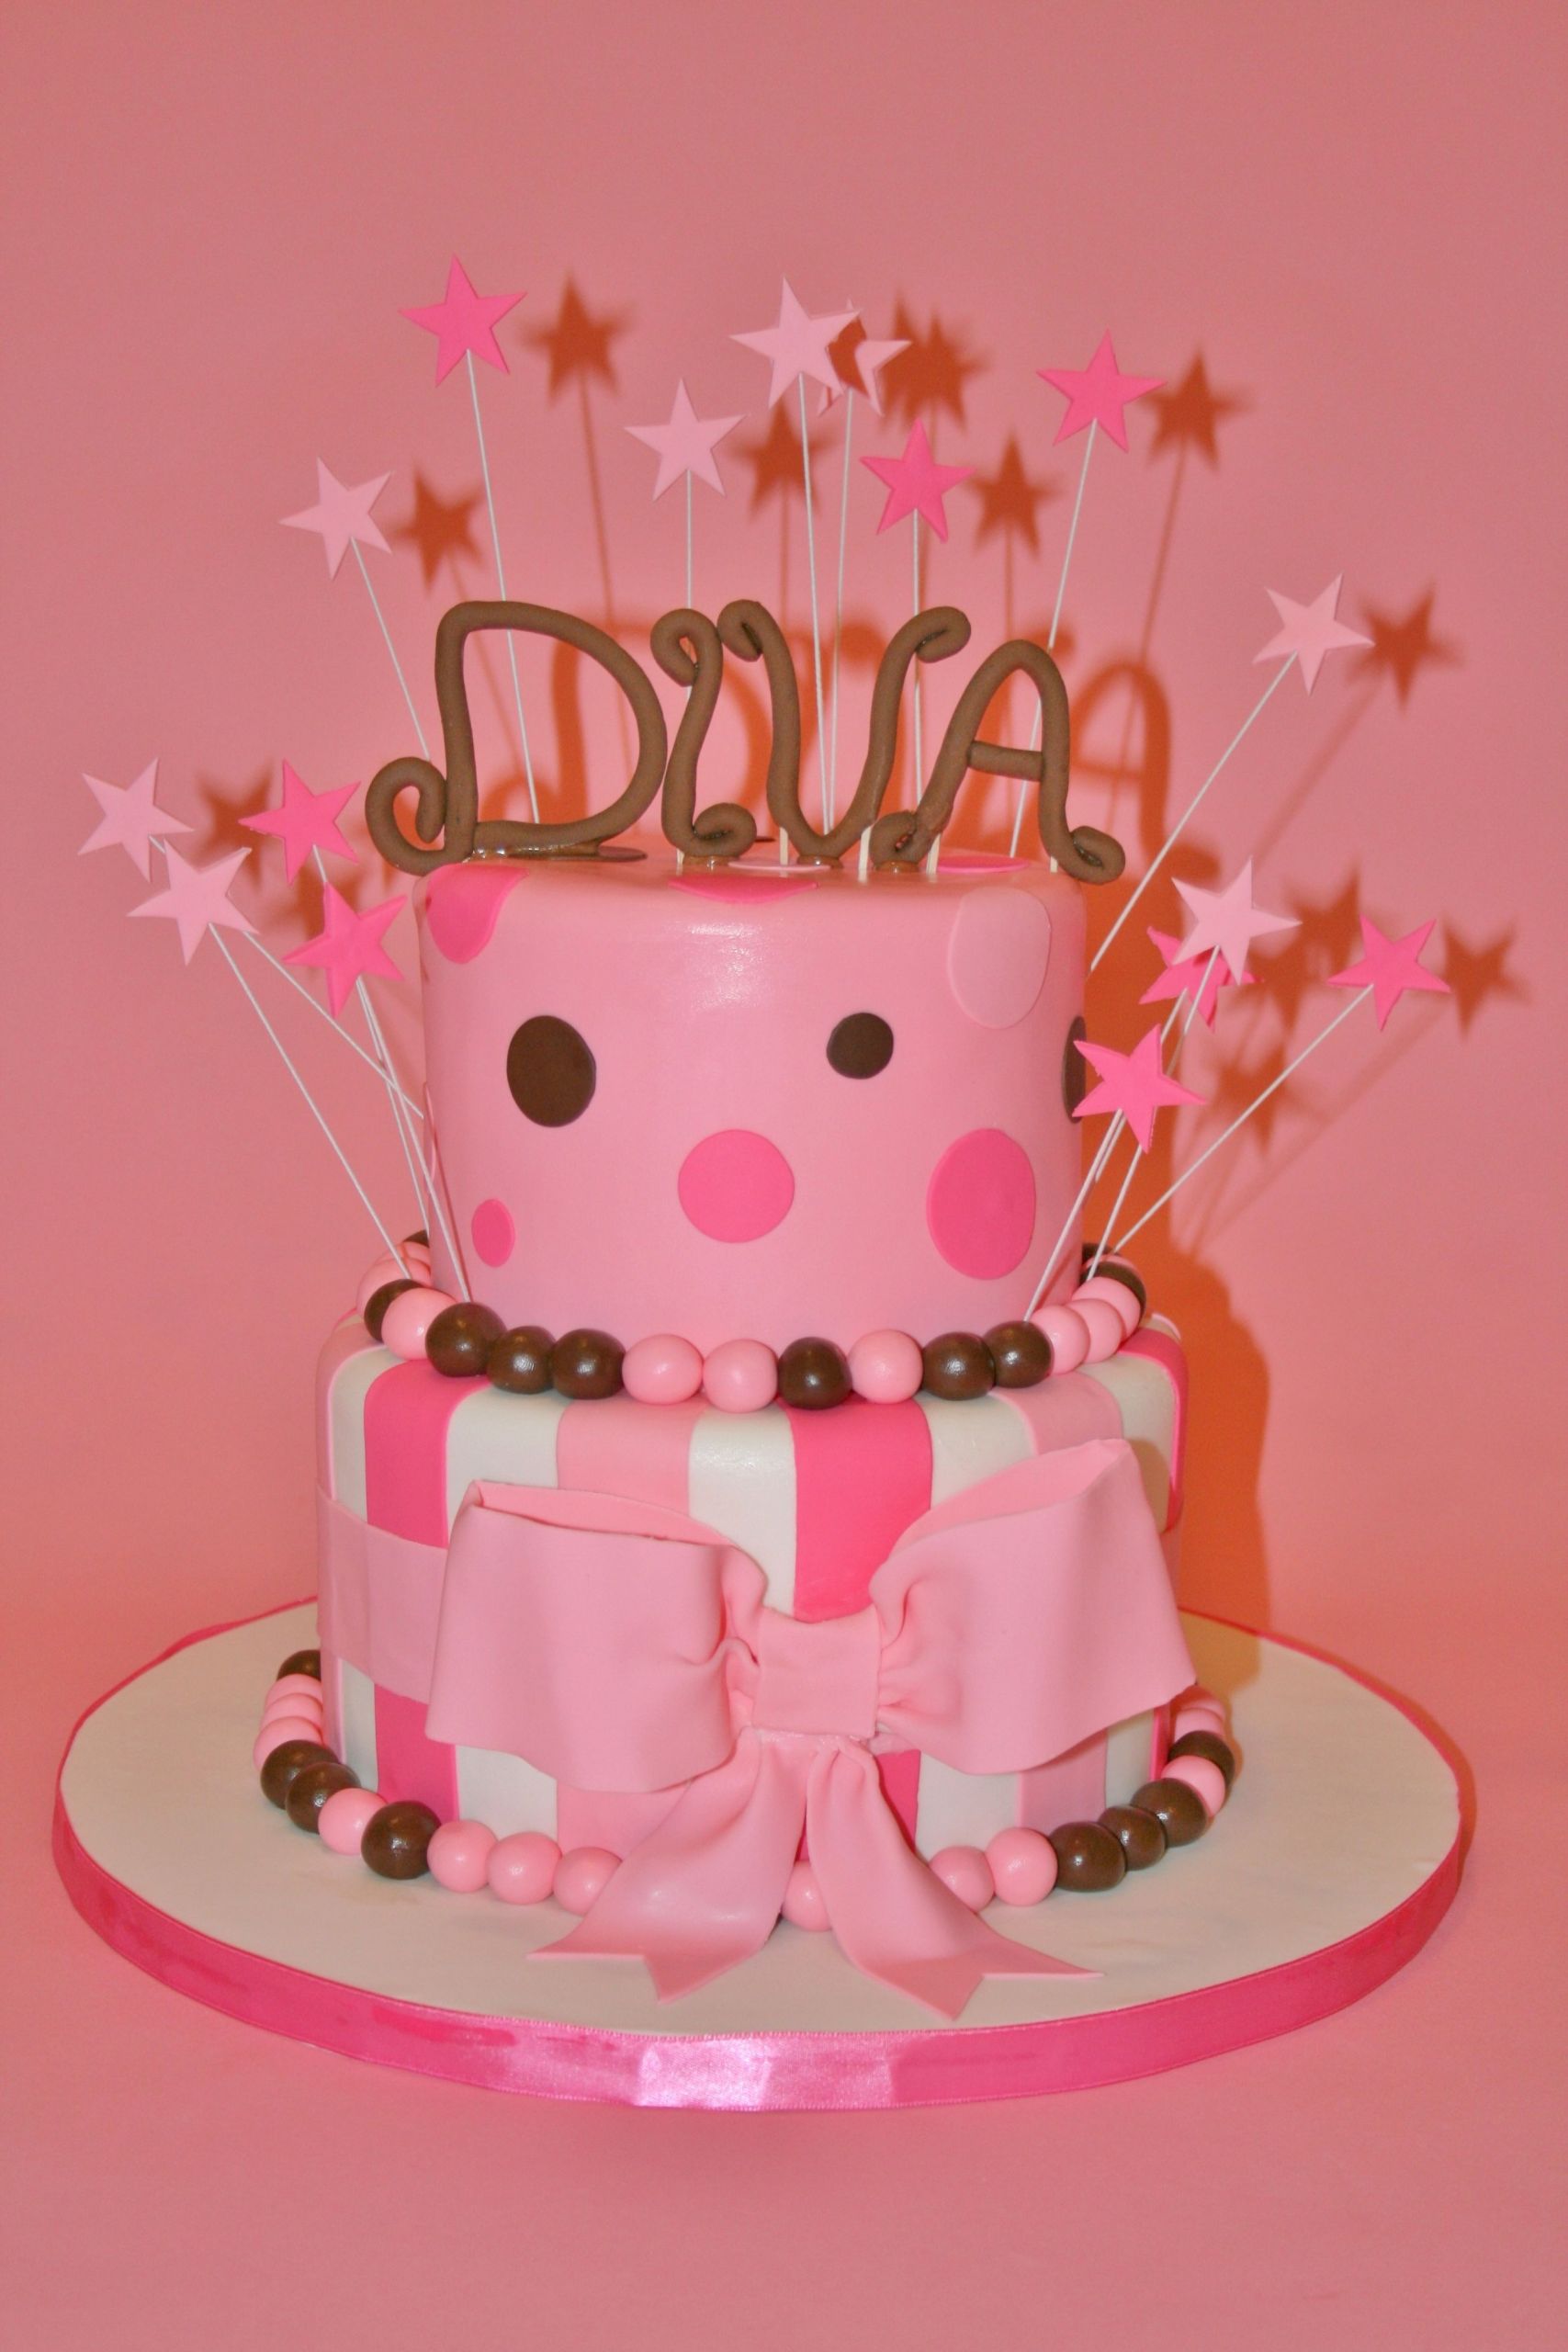 Diva Birthday Cakes
 Diva Birthday Cake